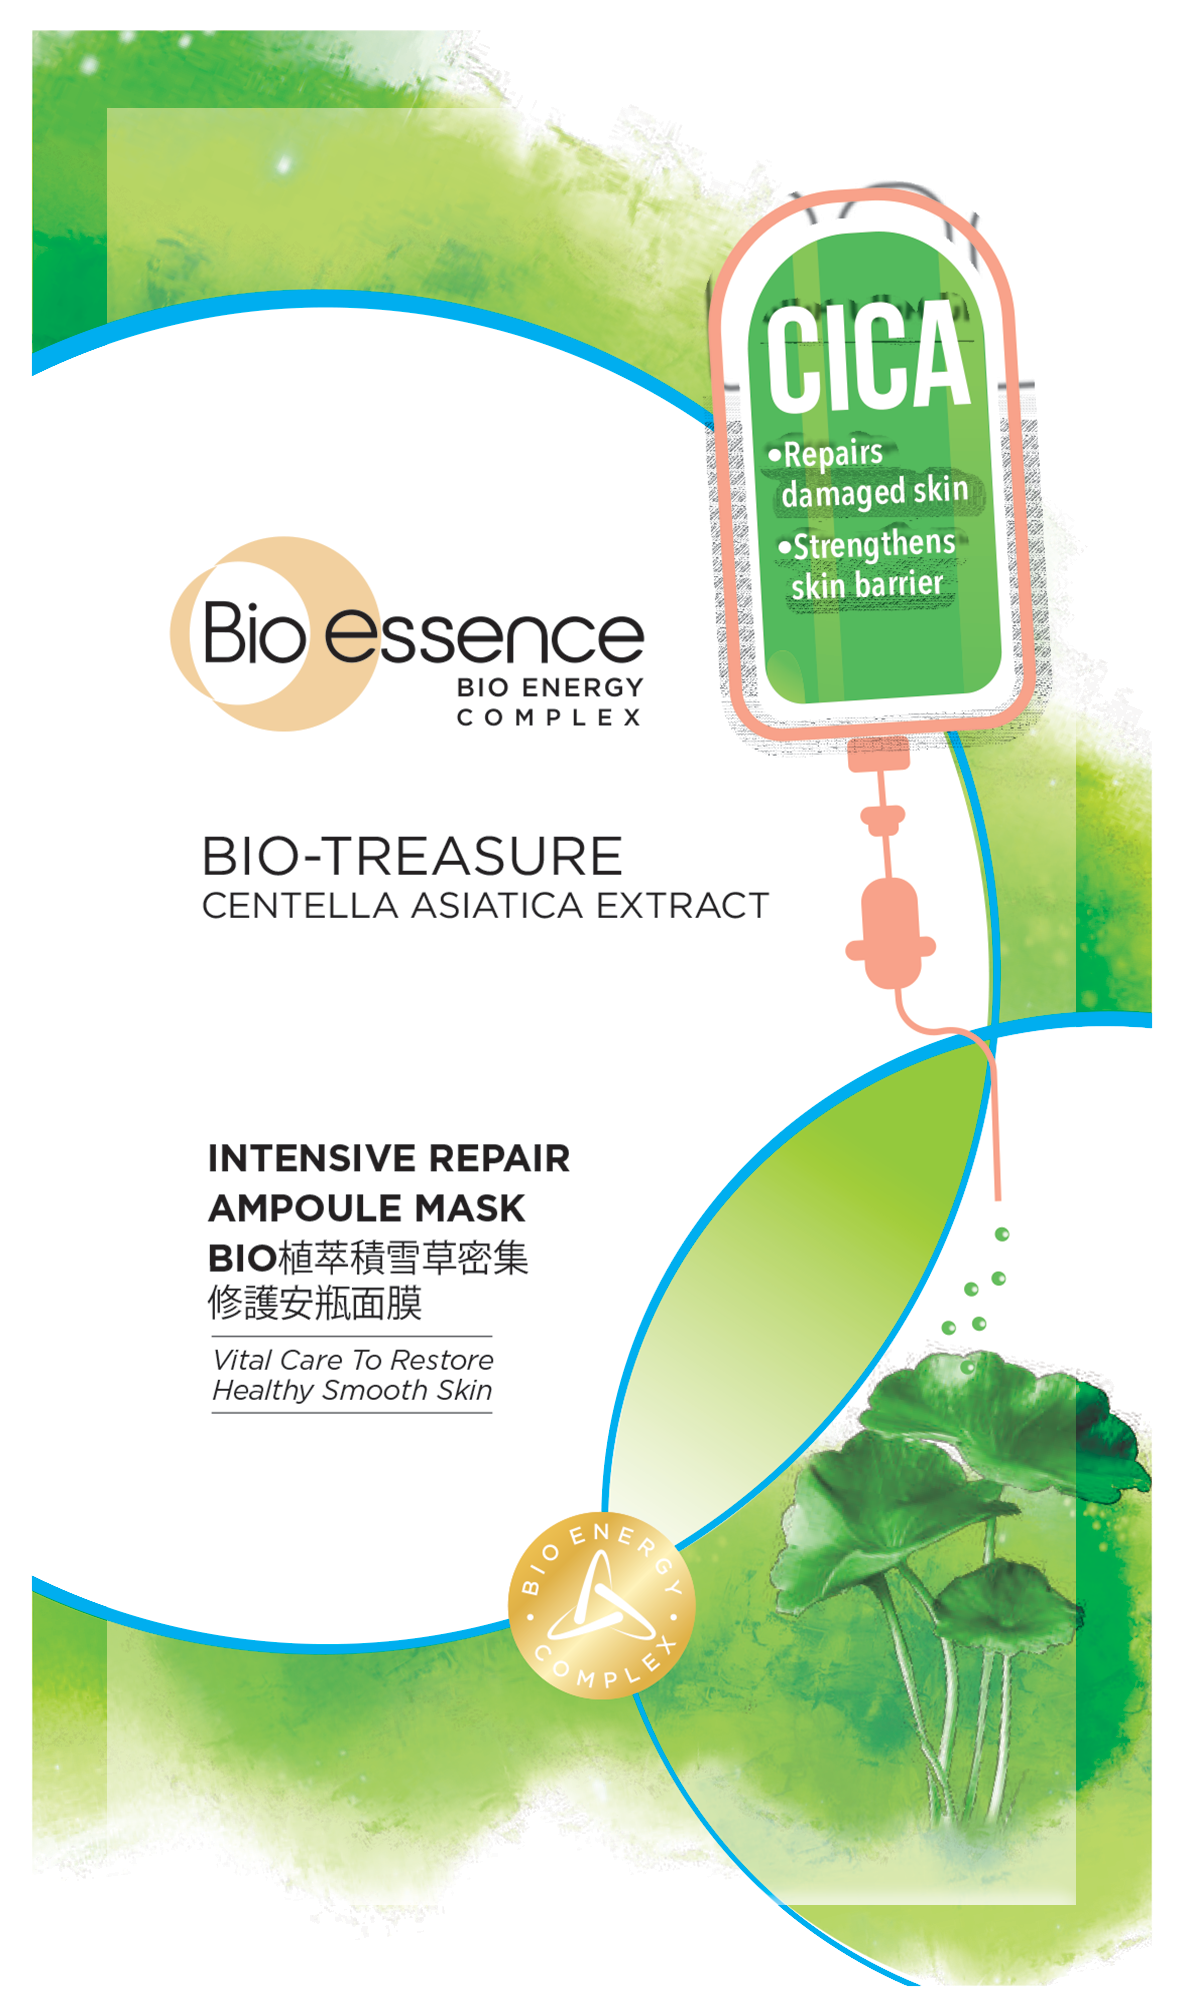 Mặt nạ giấy dưỡng ẩm Bio-essence Bio-treasurre tinh chất Rau má 20ml